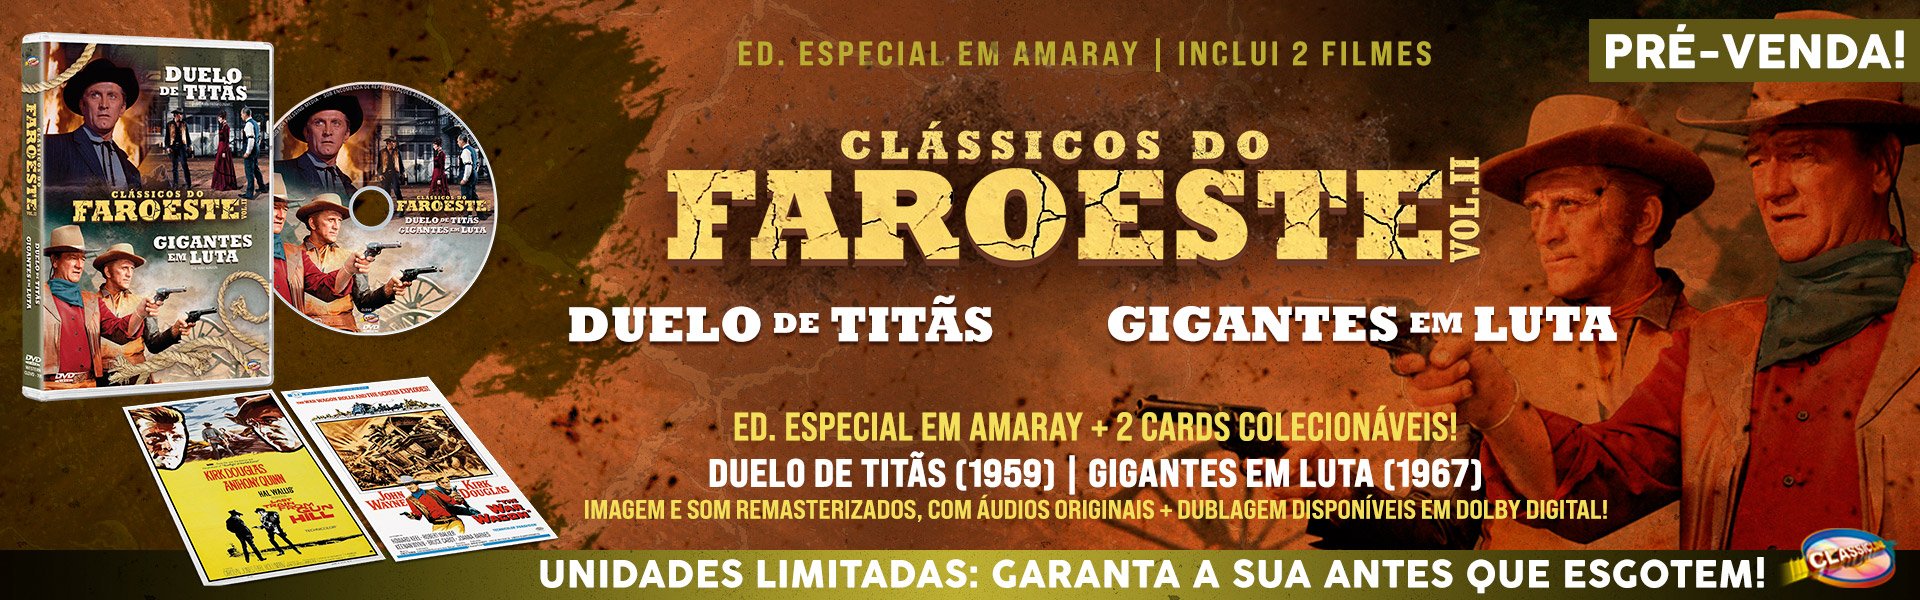 banner-classicos-do-faroeste2